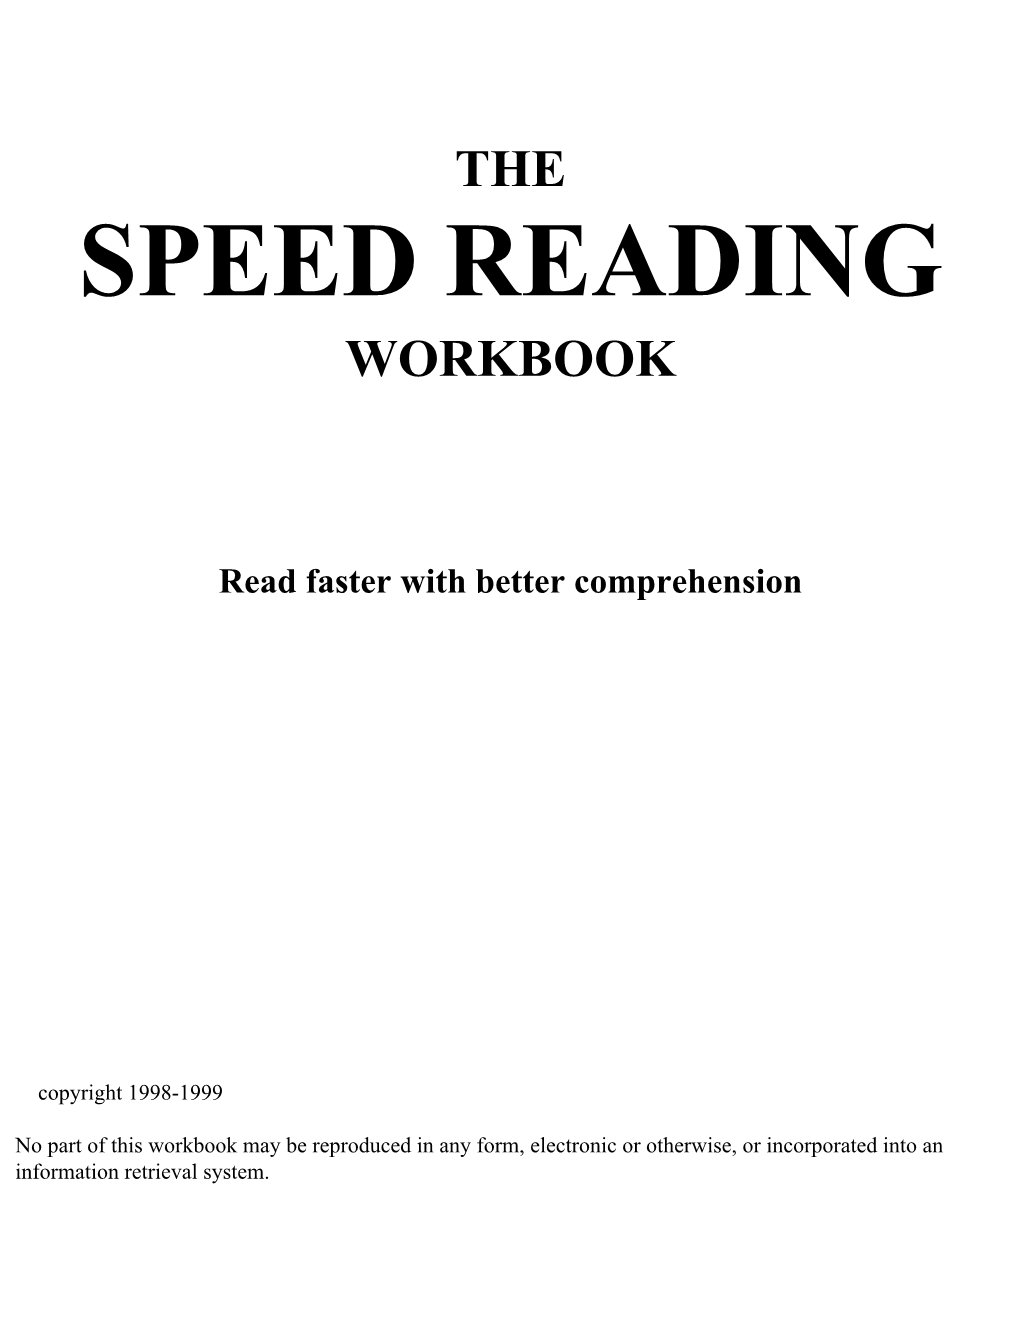 Speed Reading Workbook